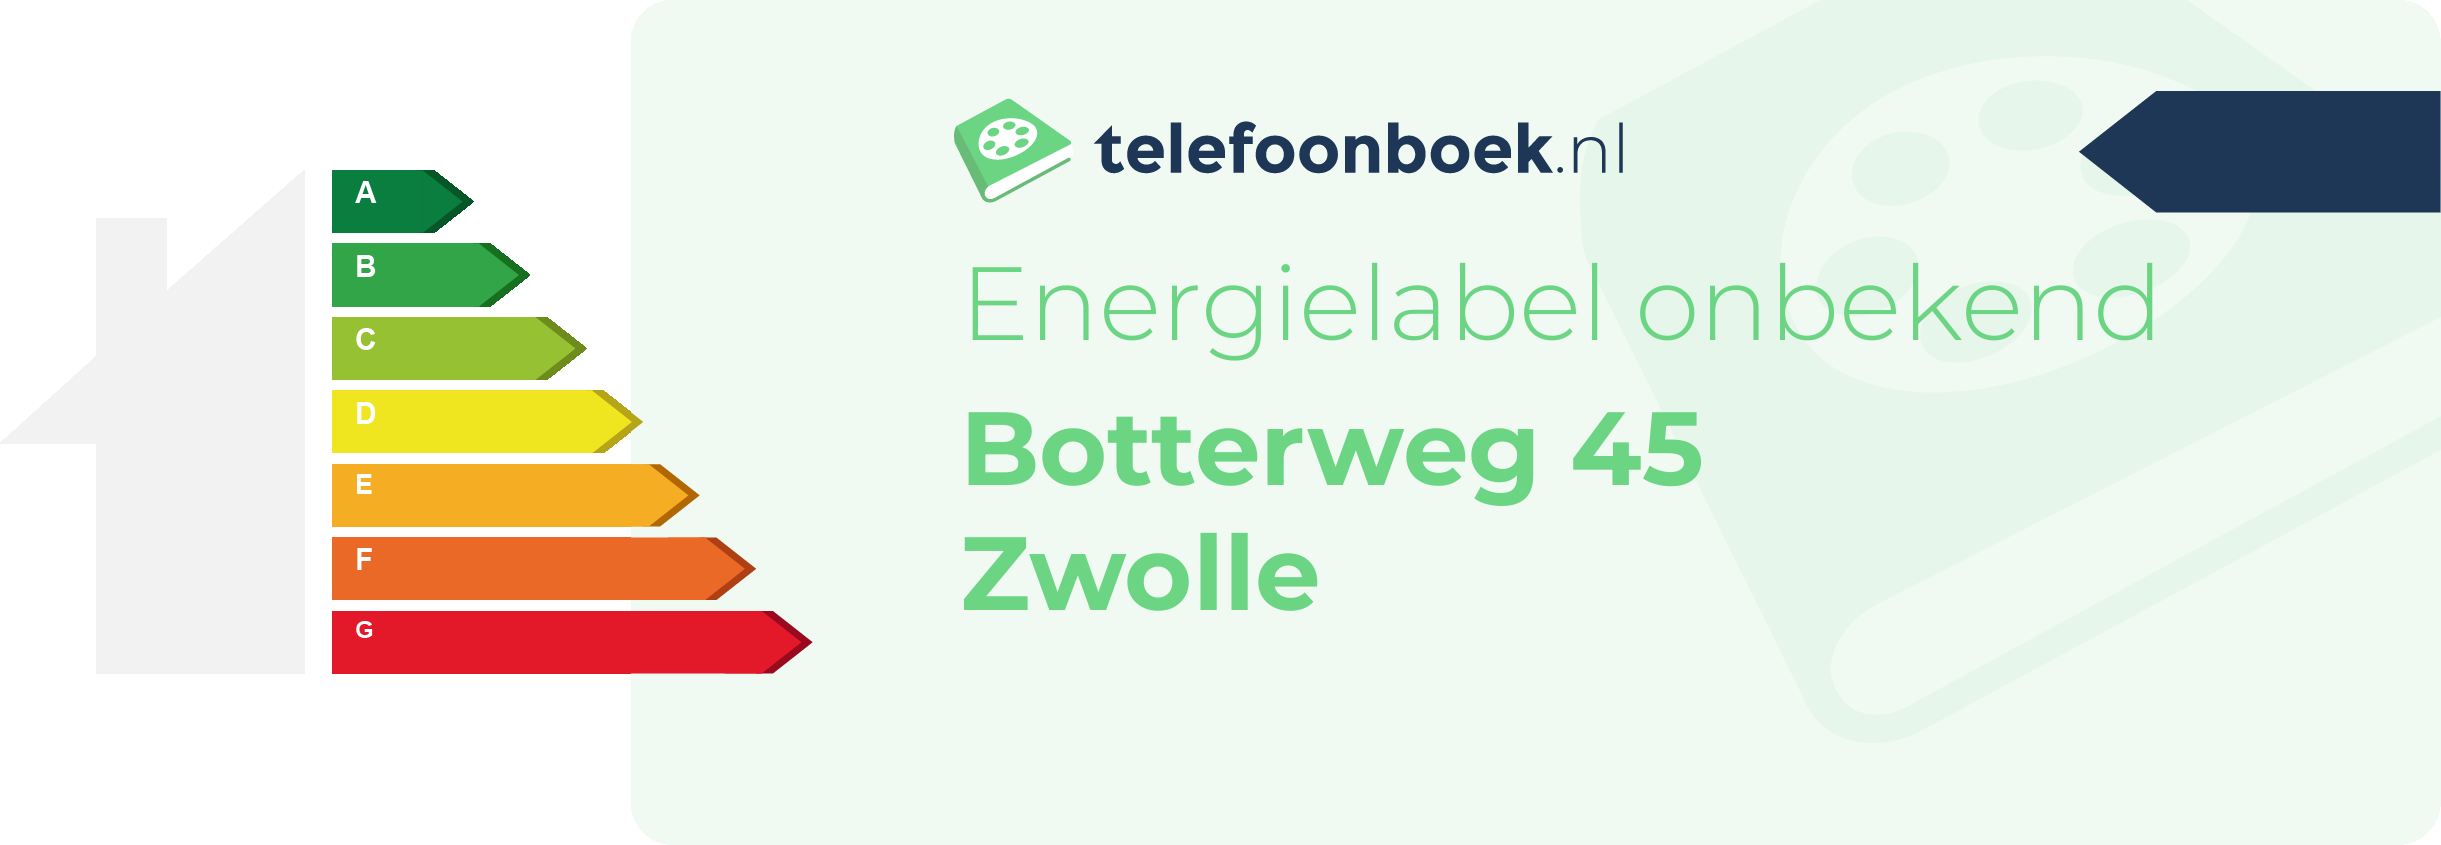 Energielabel Botterweg 45 Zwolle